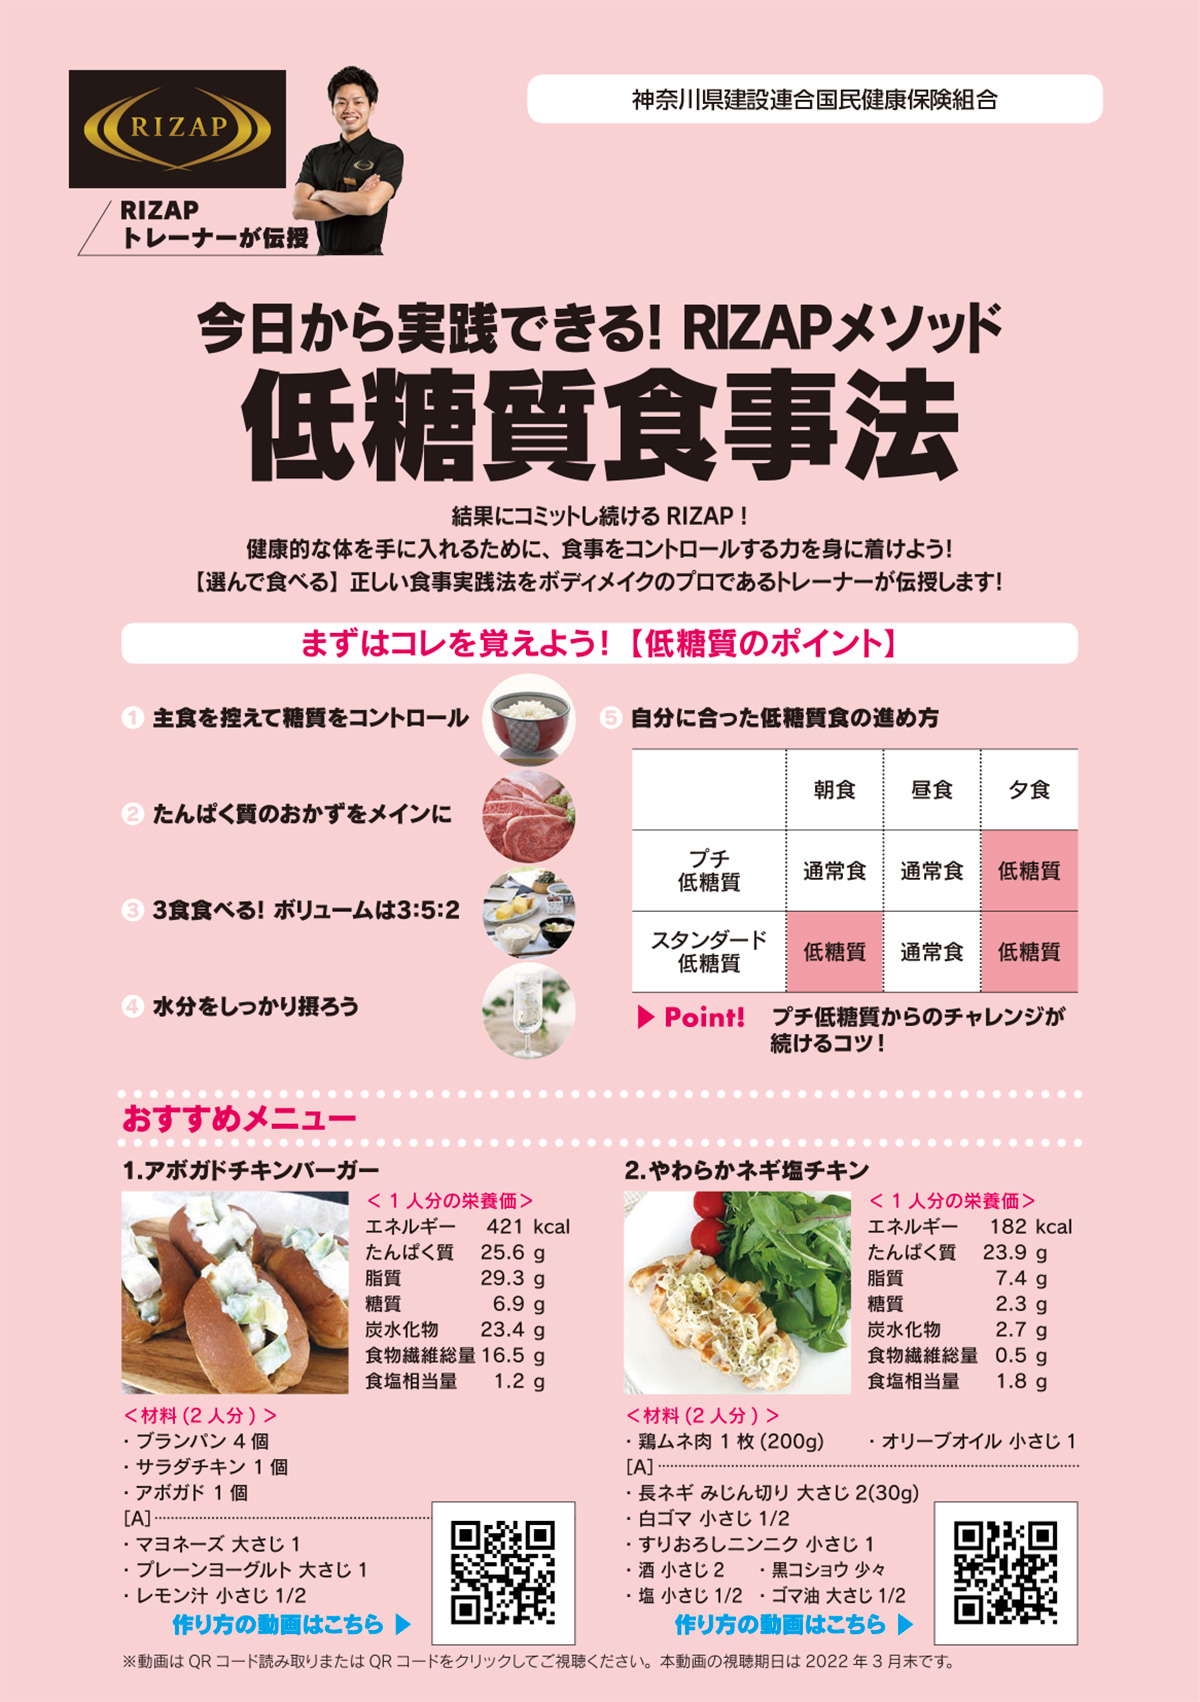 Rizapコラム 動画 低糖質食事法 を掲載しました 神建連国保 神奈川県建設連合国民健康保険組合